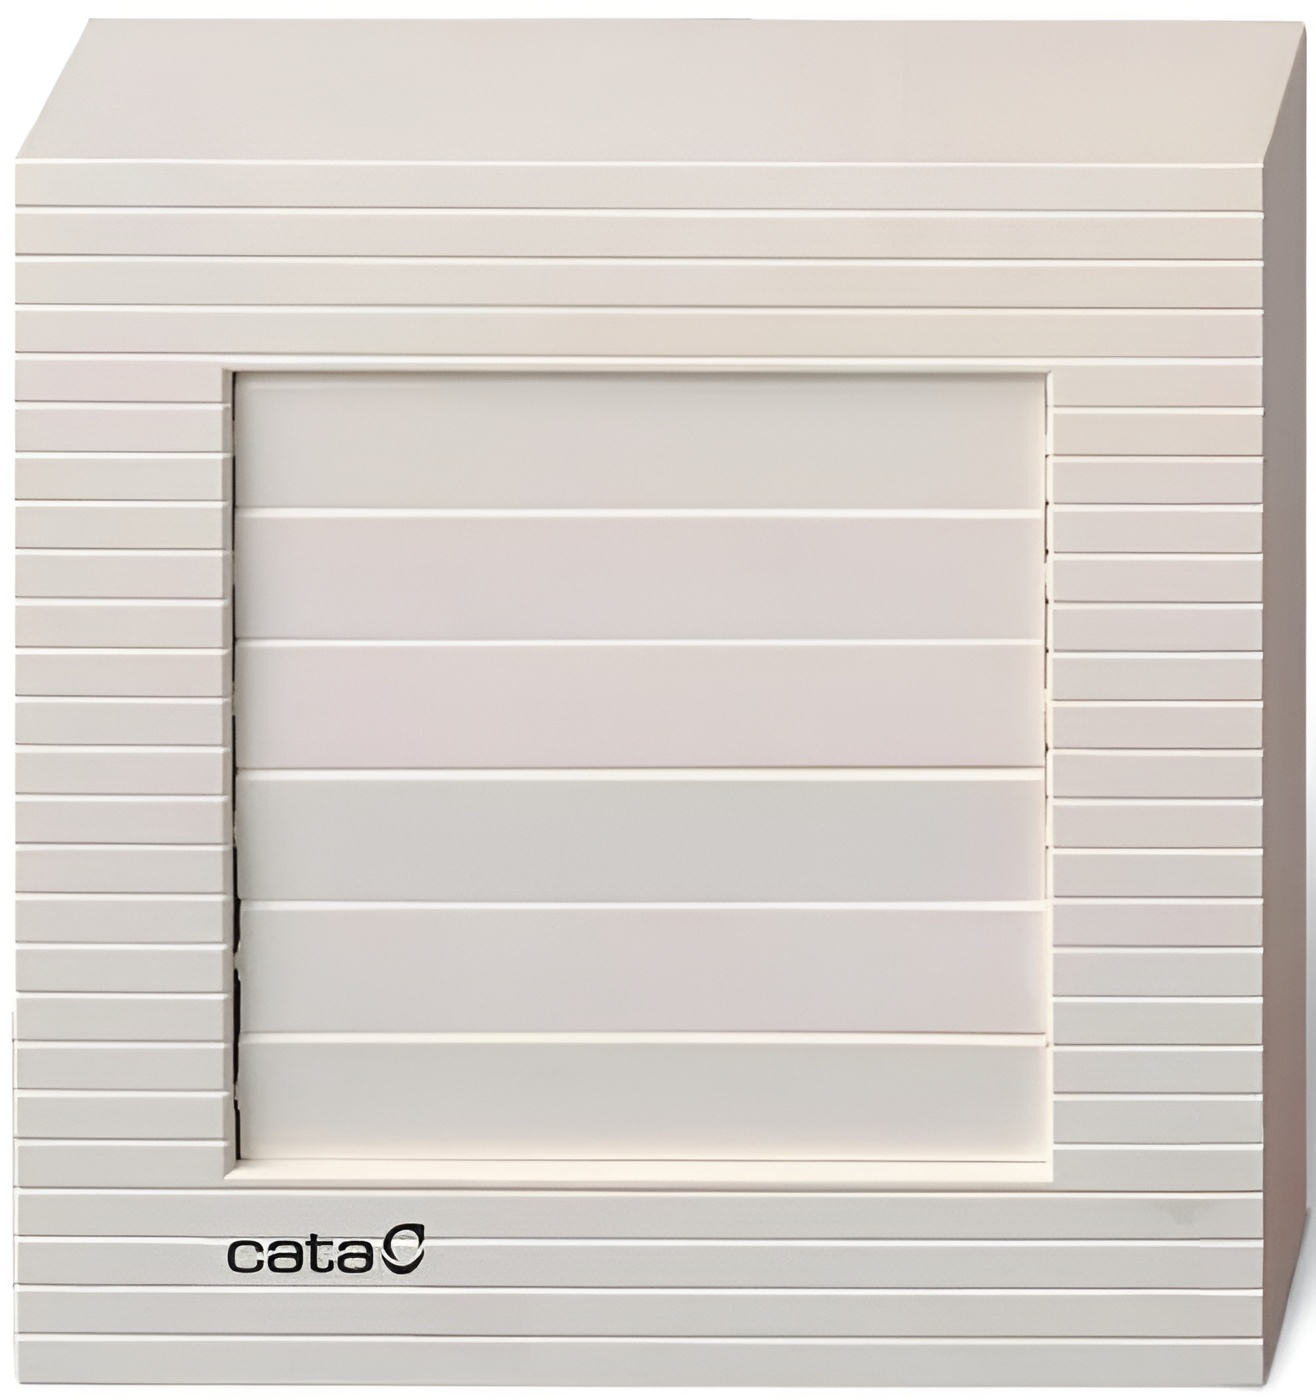 Вентилятор Cata вытяжной Cata B-10 Matic